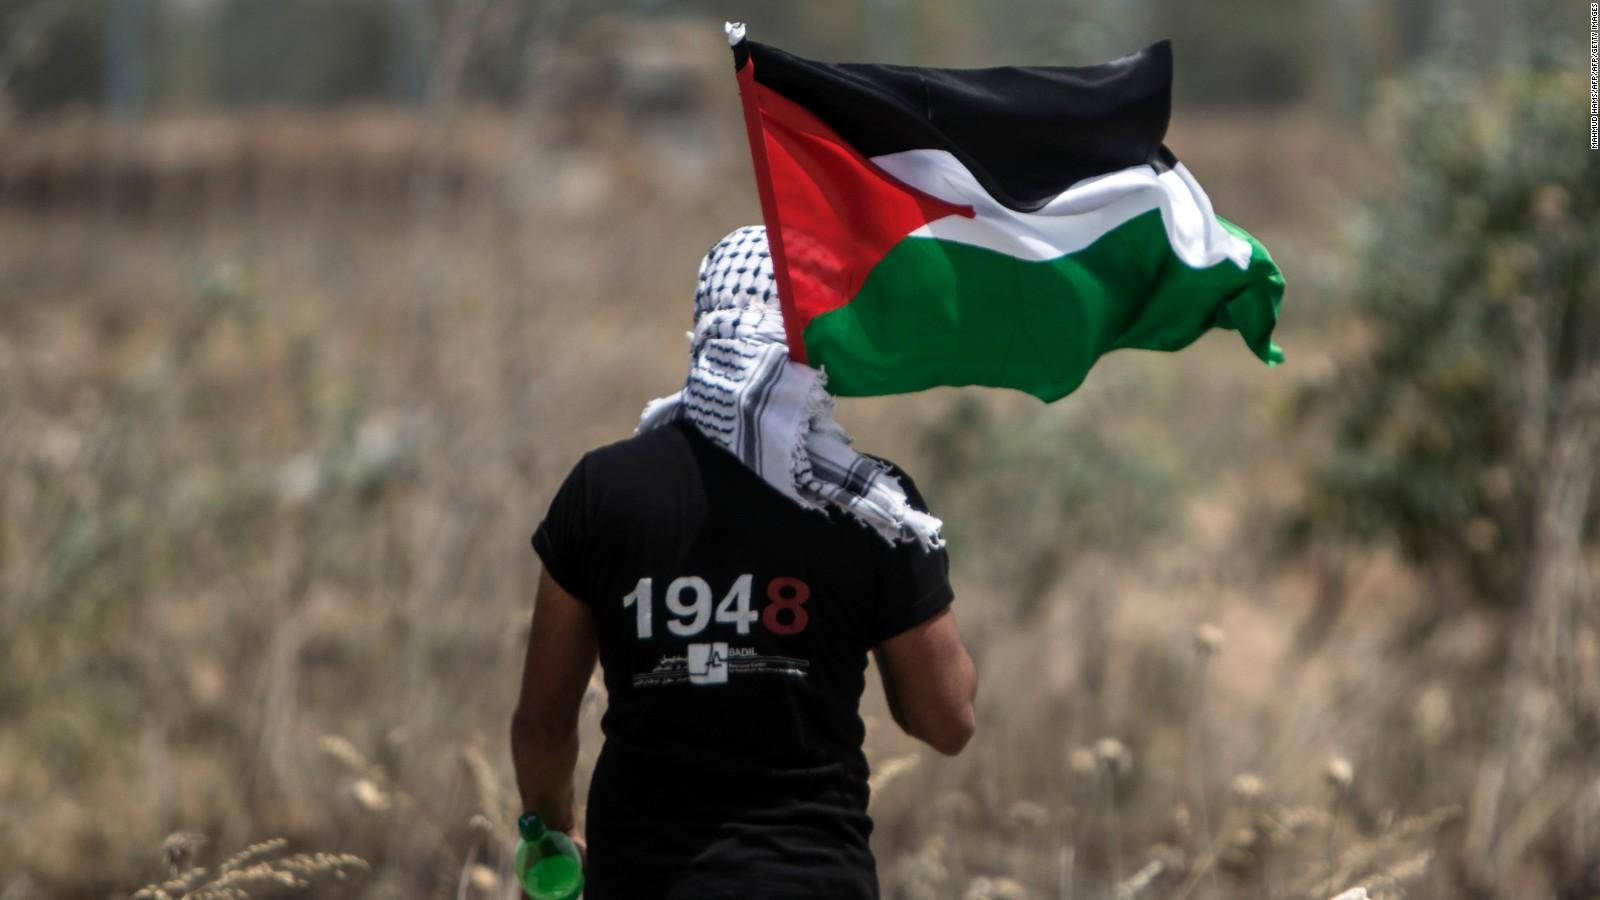 Palestine Flag And 1948 Shirt Background